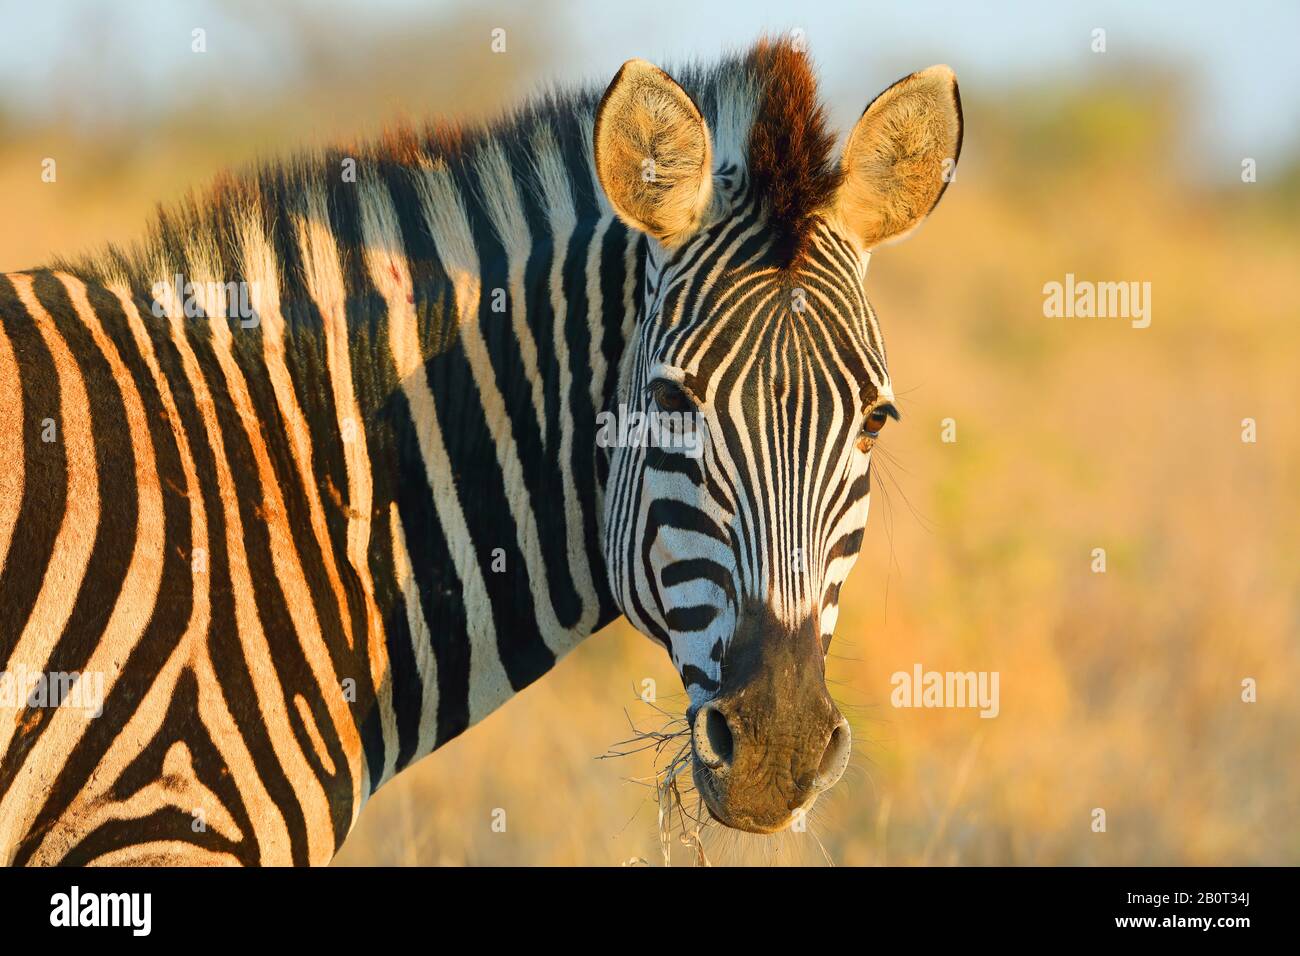 Common Zebra (Equus quagga), portrait, South Africa, Krueger National Park Stock Photo